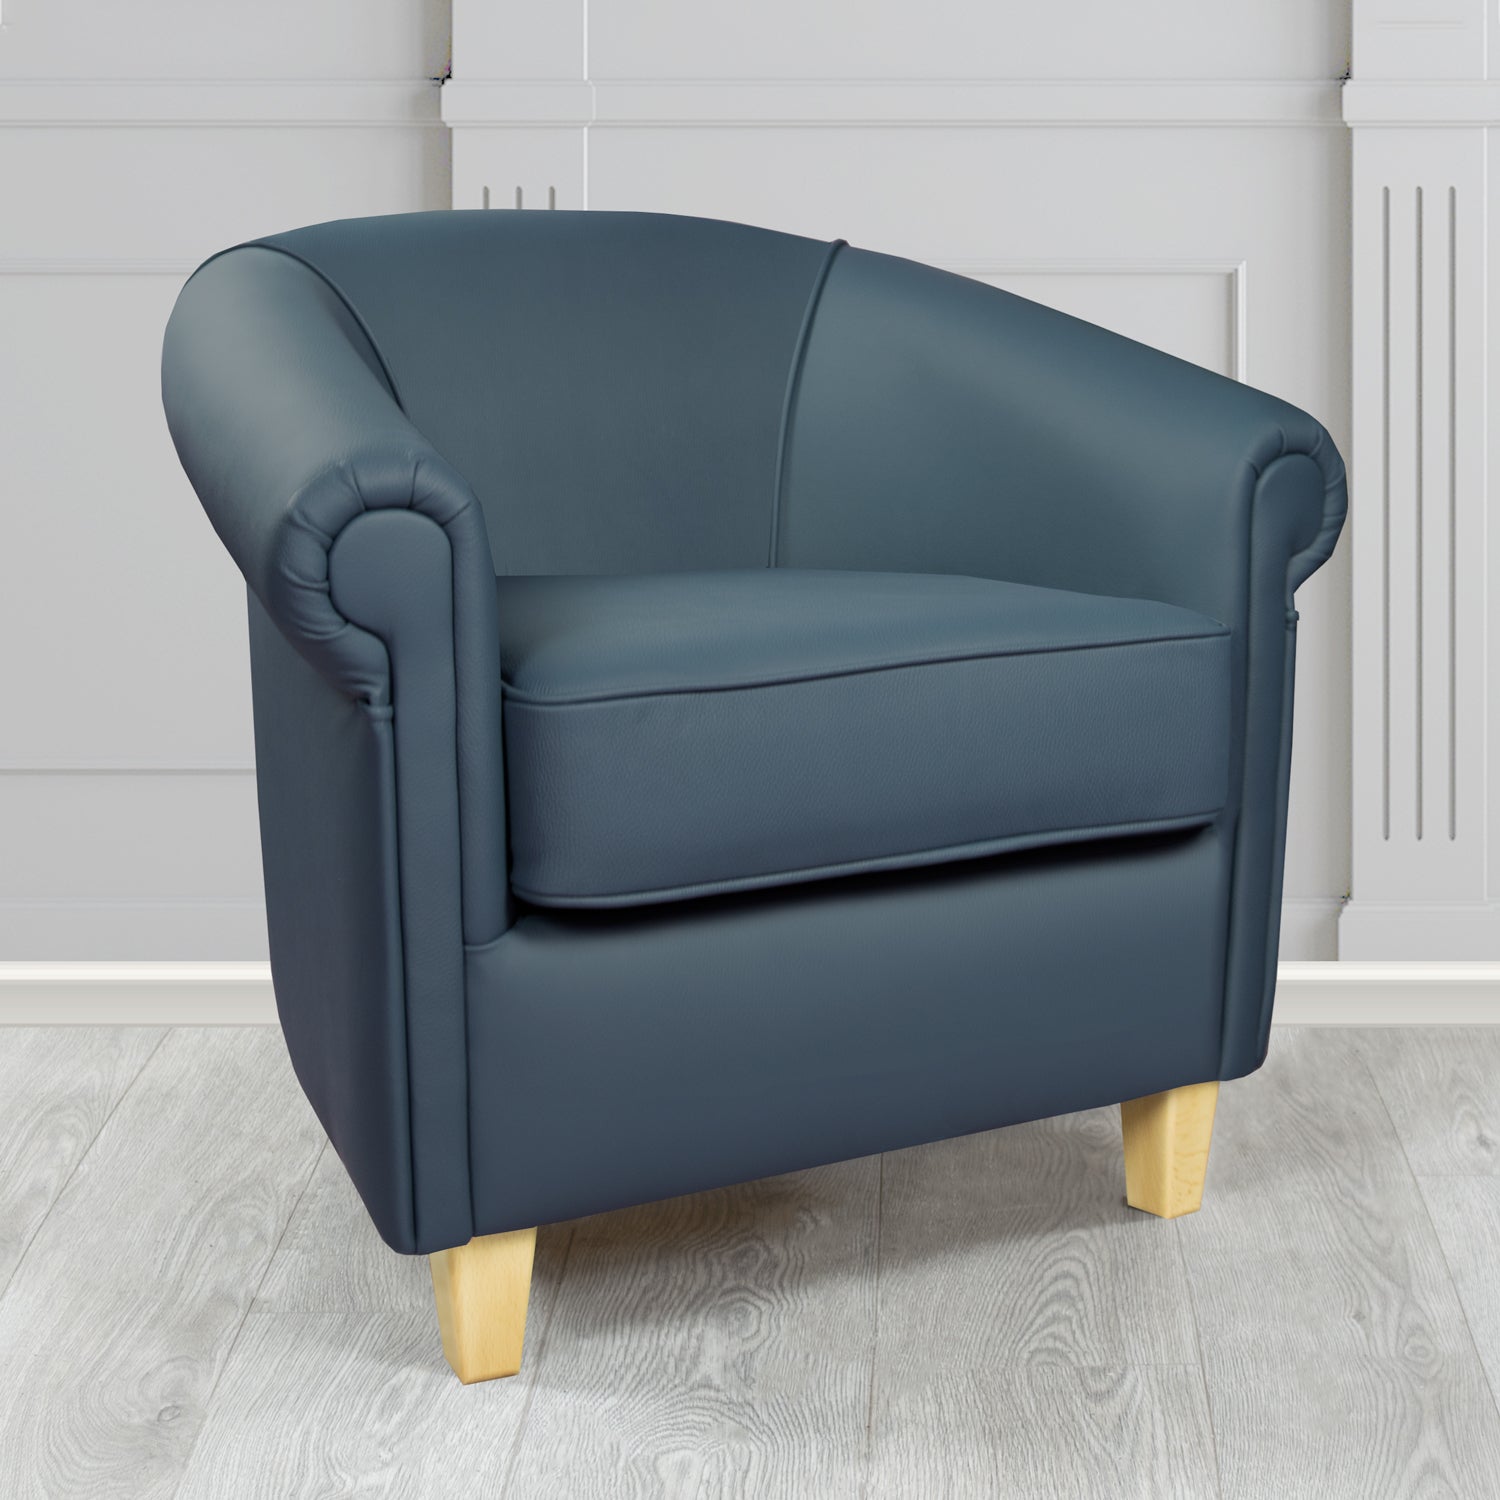 Siena Tub Chair in Crib 5 Shelly Suffolk Blue Genuine Leather - The Tub Chair Shop